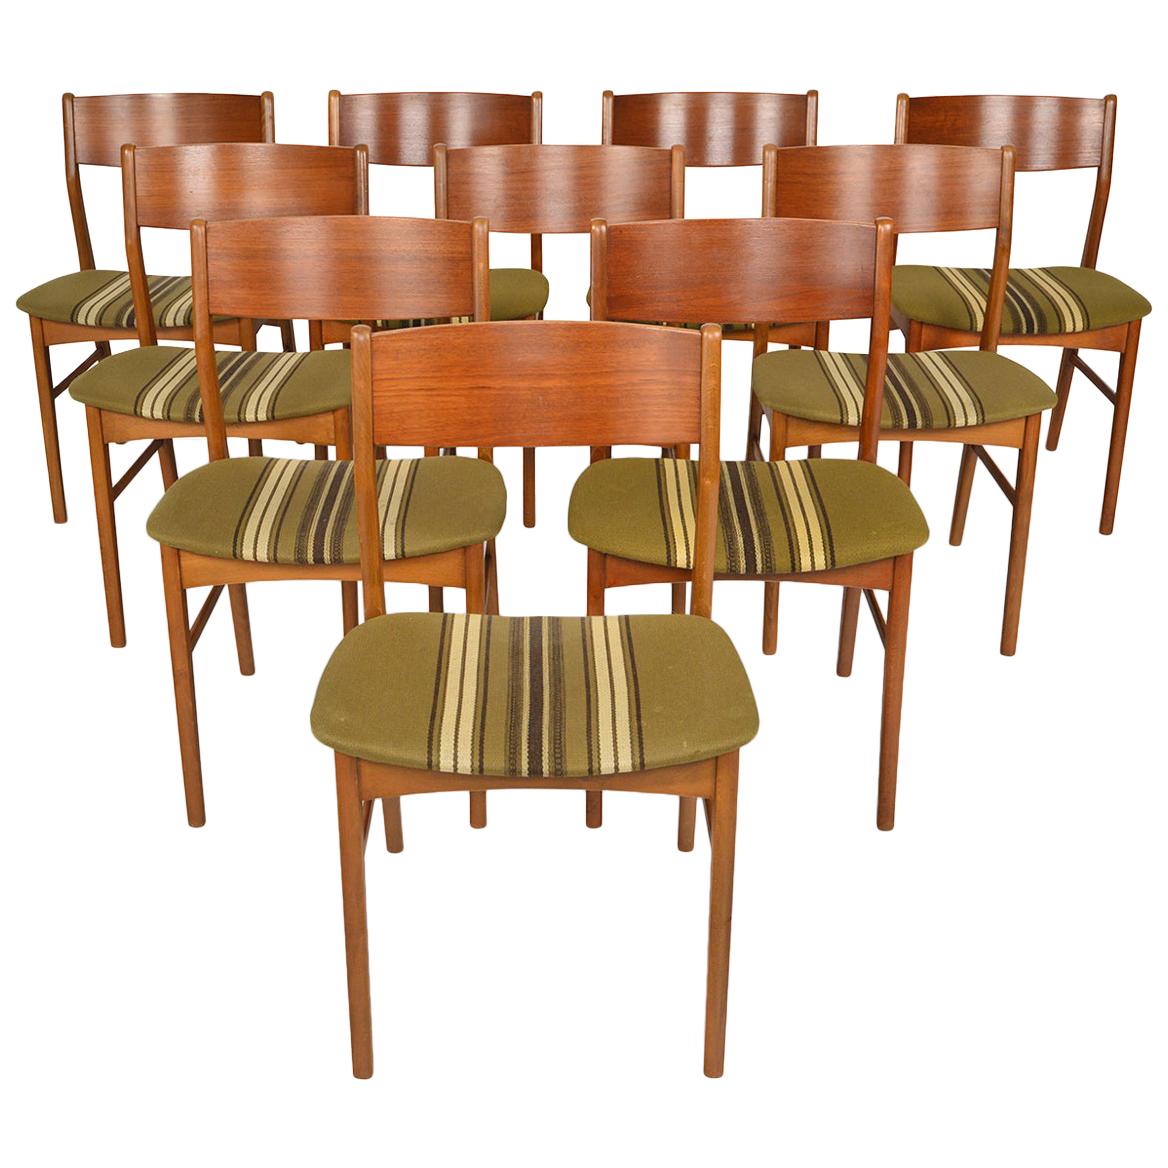 Set of Ten Danish Modern Dining Chairs in Teak and Beech